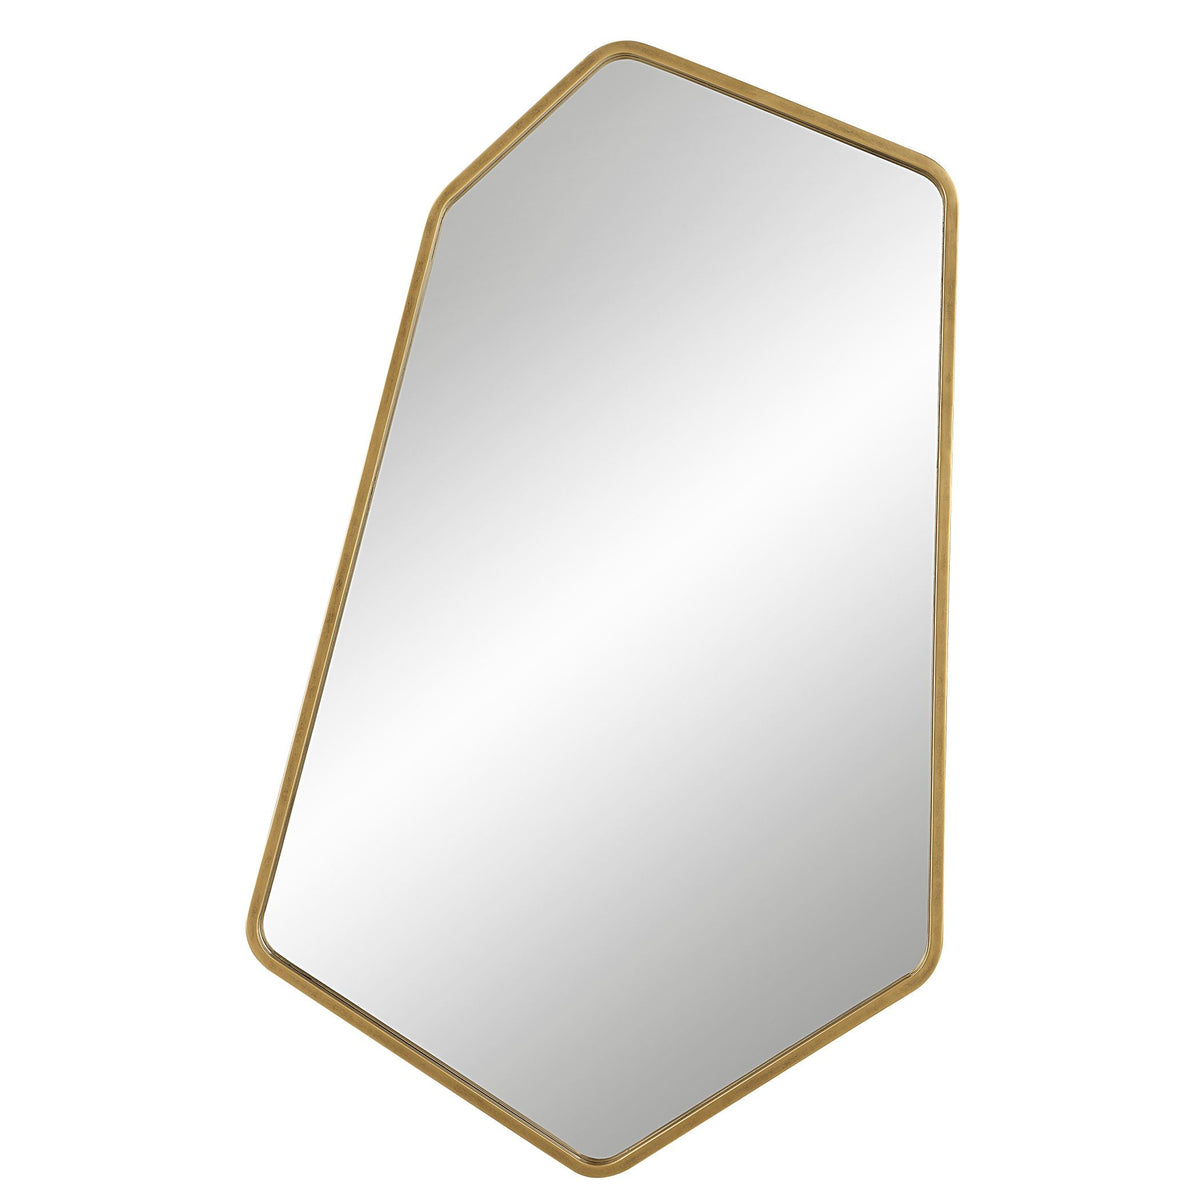 Uttermost Linneah Large Gold Mirror